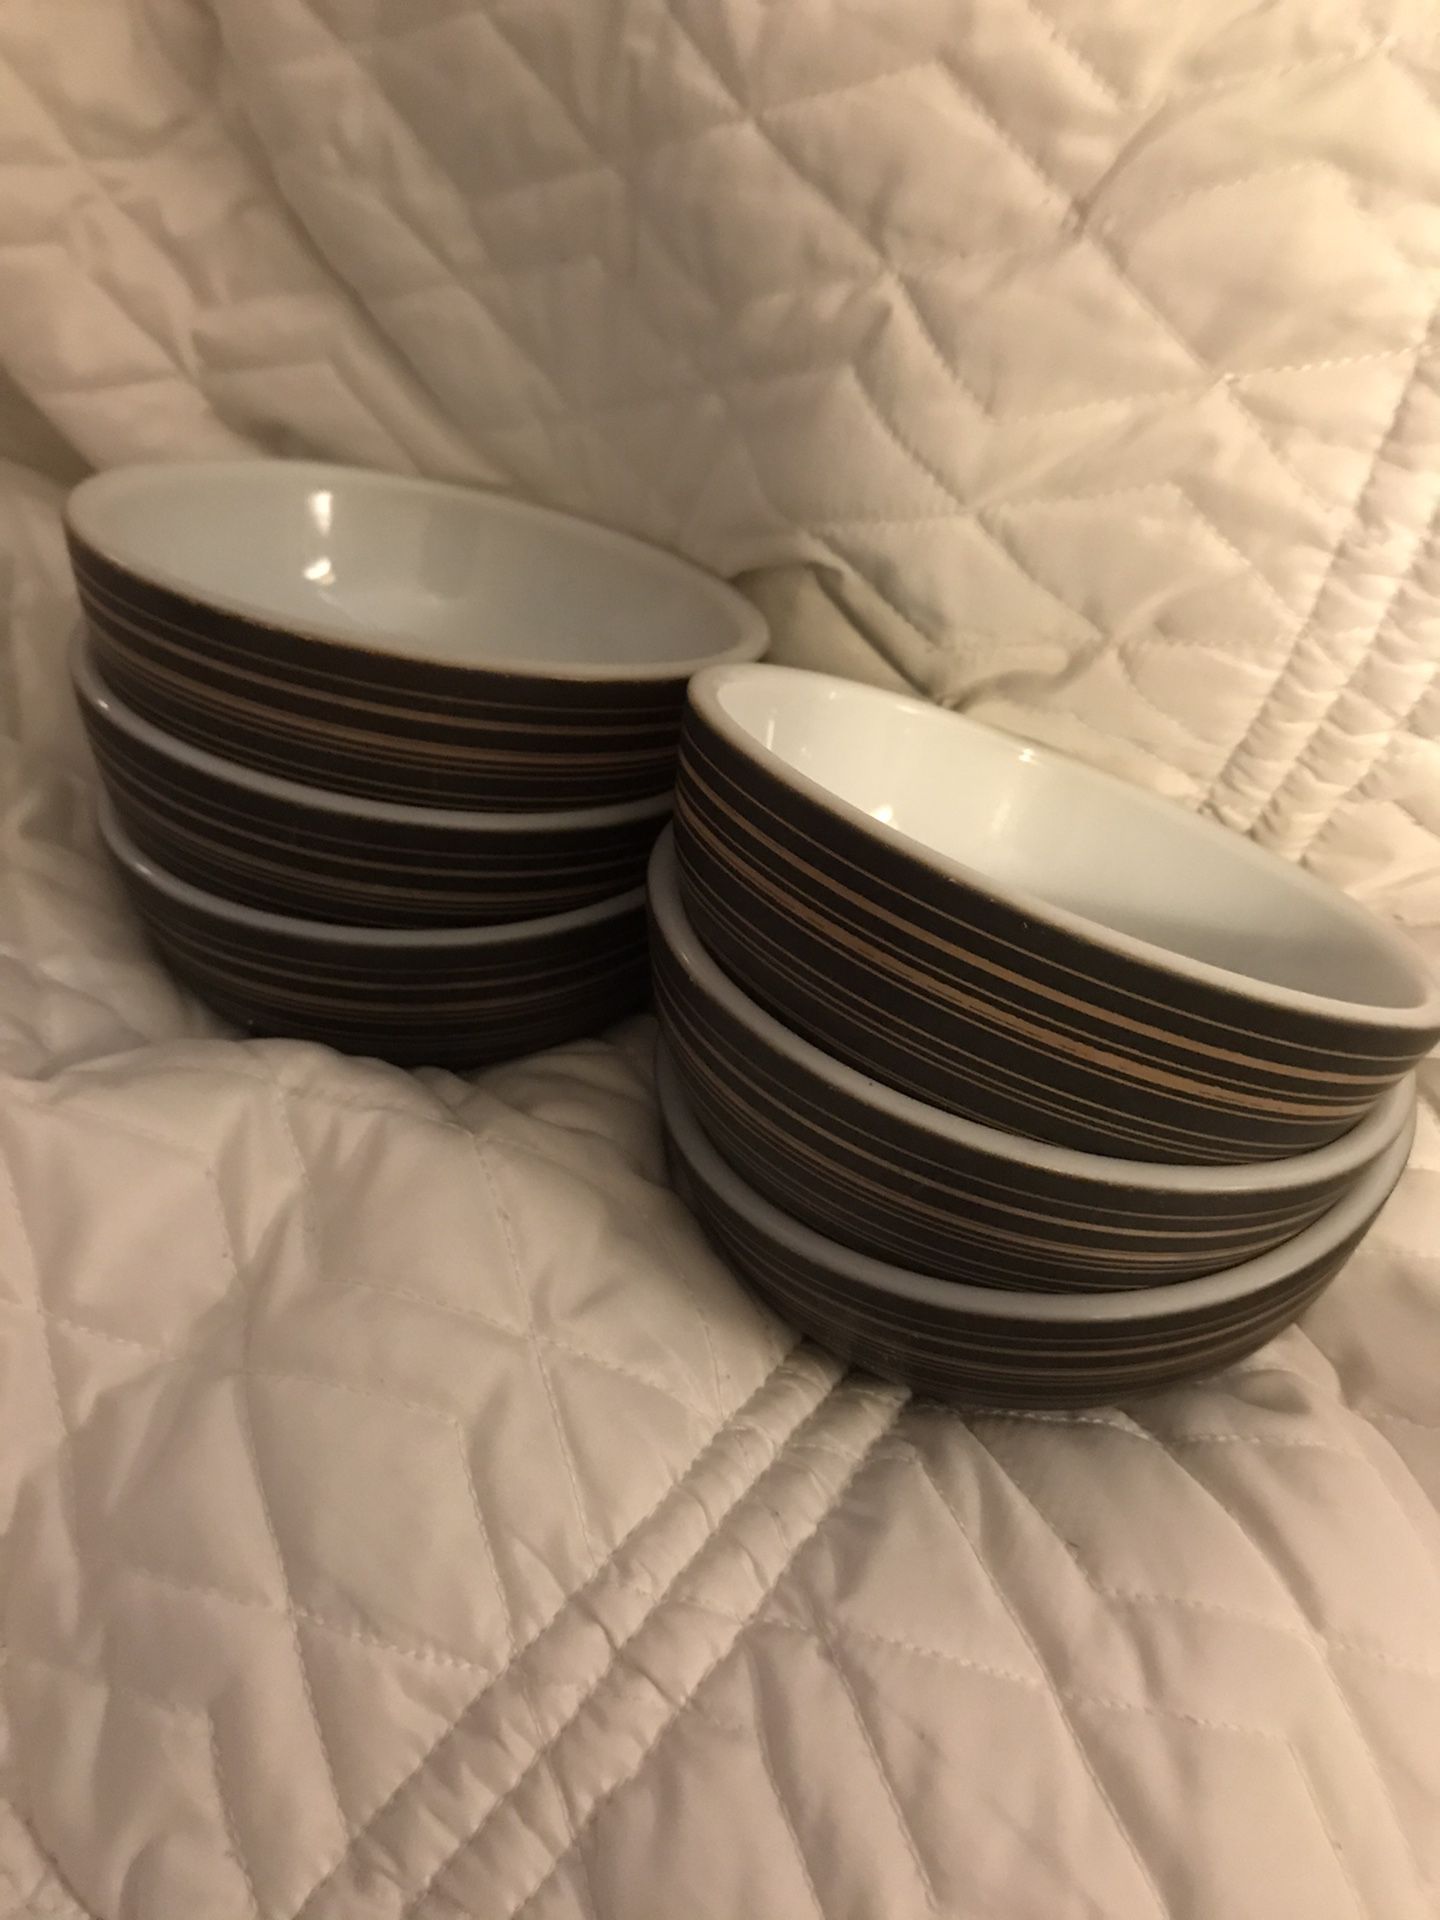 Vintage Pyrex Terra fruit bowls